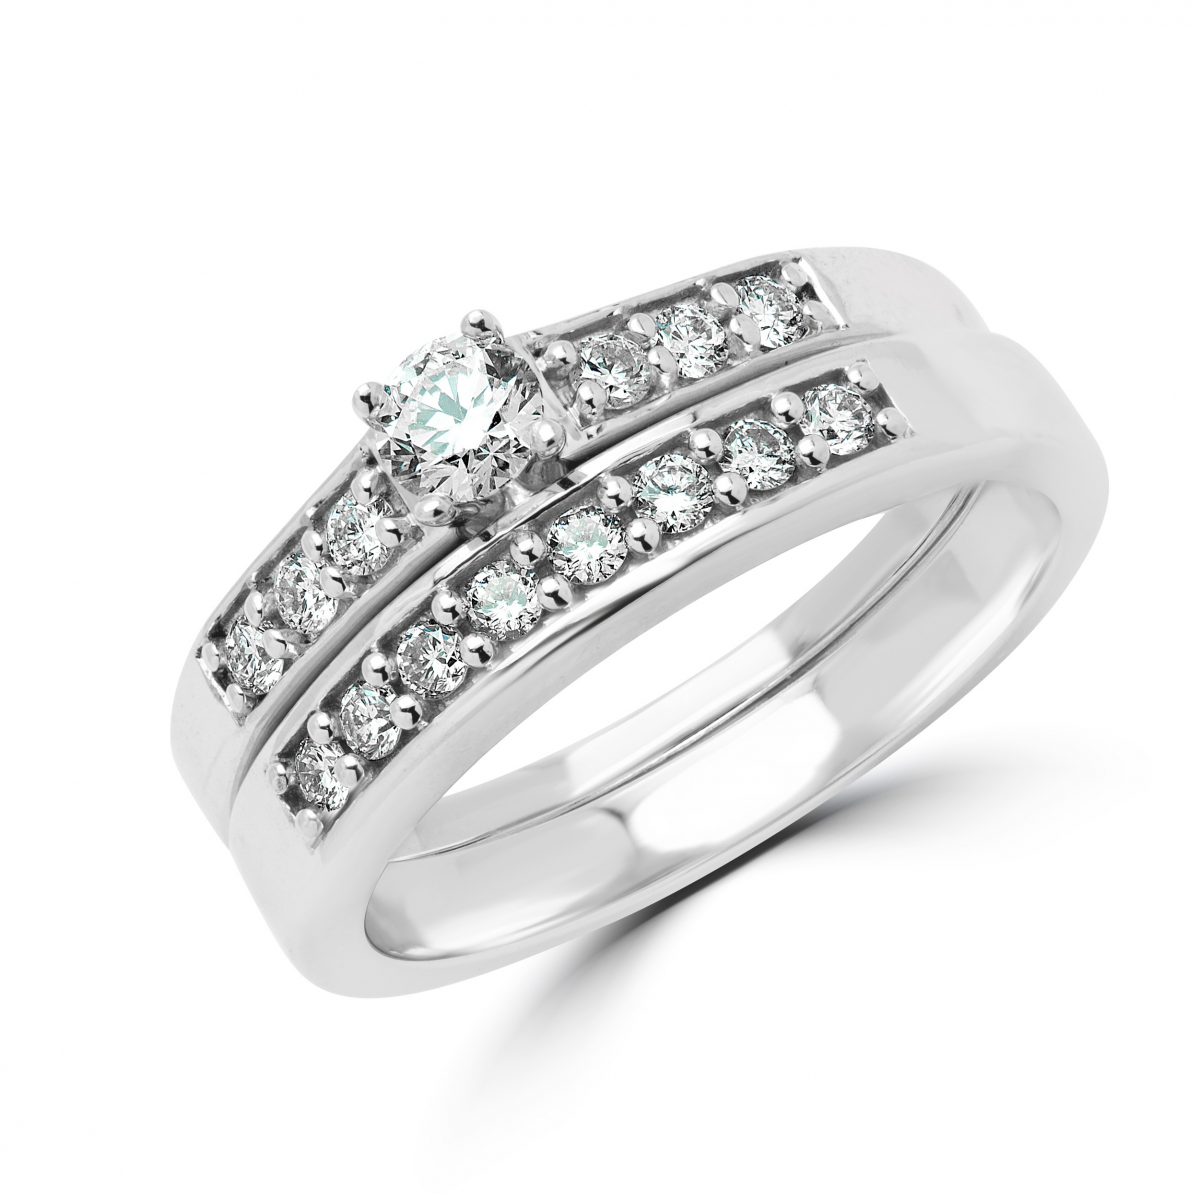 Diamond engagement ring bridal set 0.46 (ctw) in 14k white gold